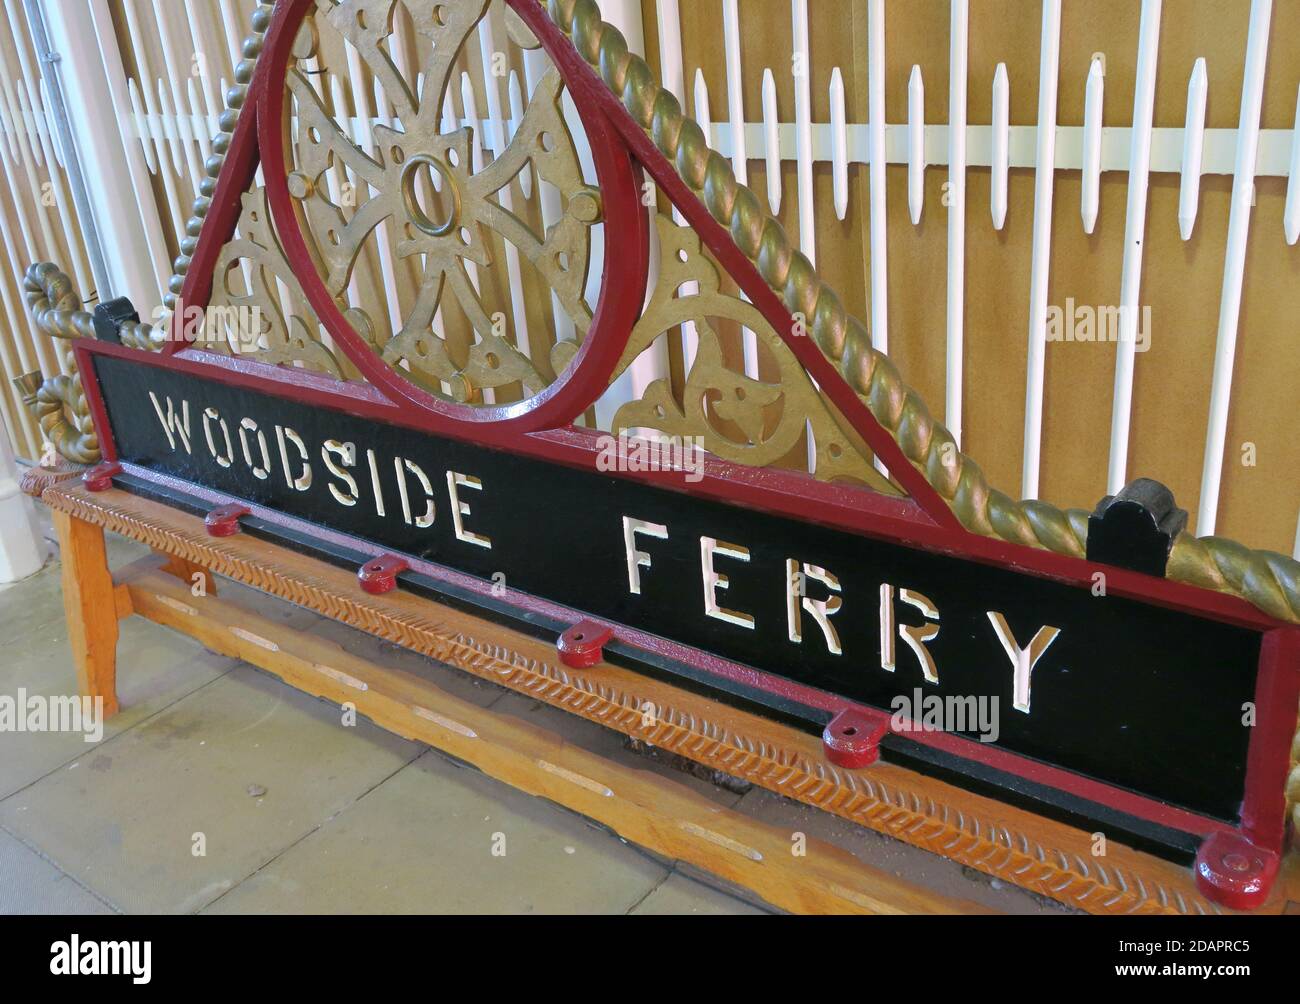 Woodside Ferry Banck, terminal dei traghetti, Birkenhead, Wirral, Merseyside, Cheshire, Inghilterra, Regno Unito Foto Stock